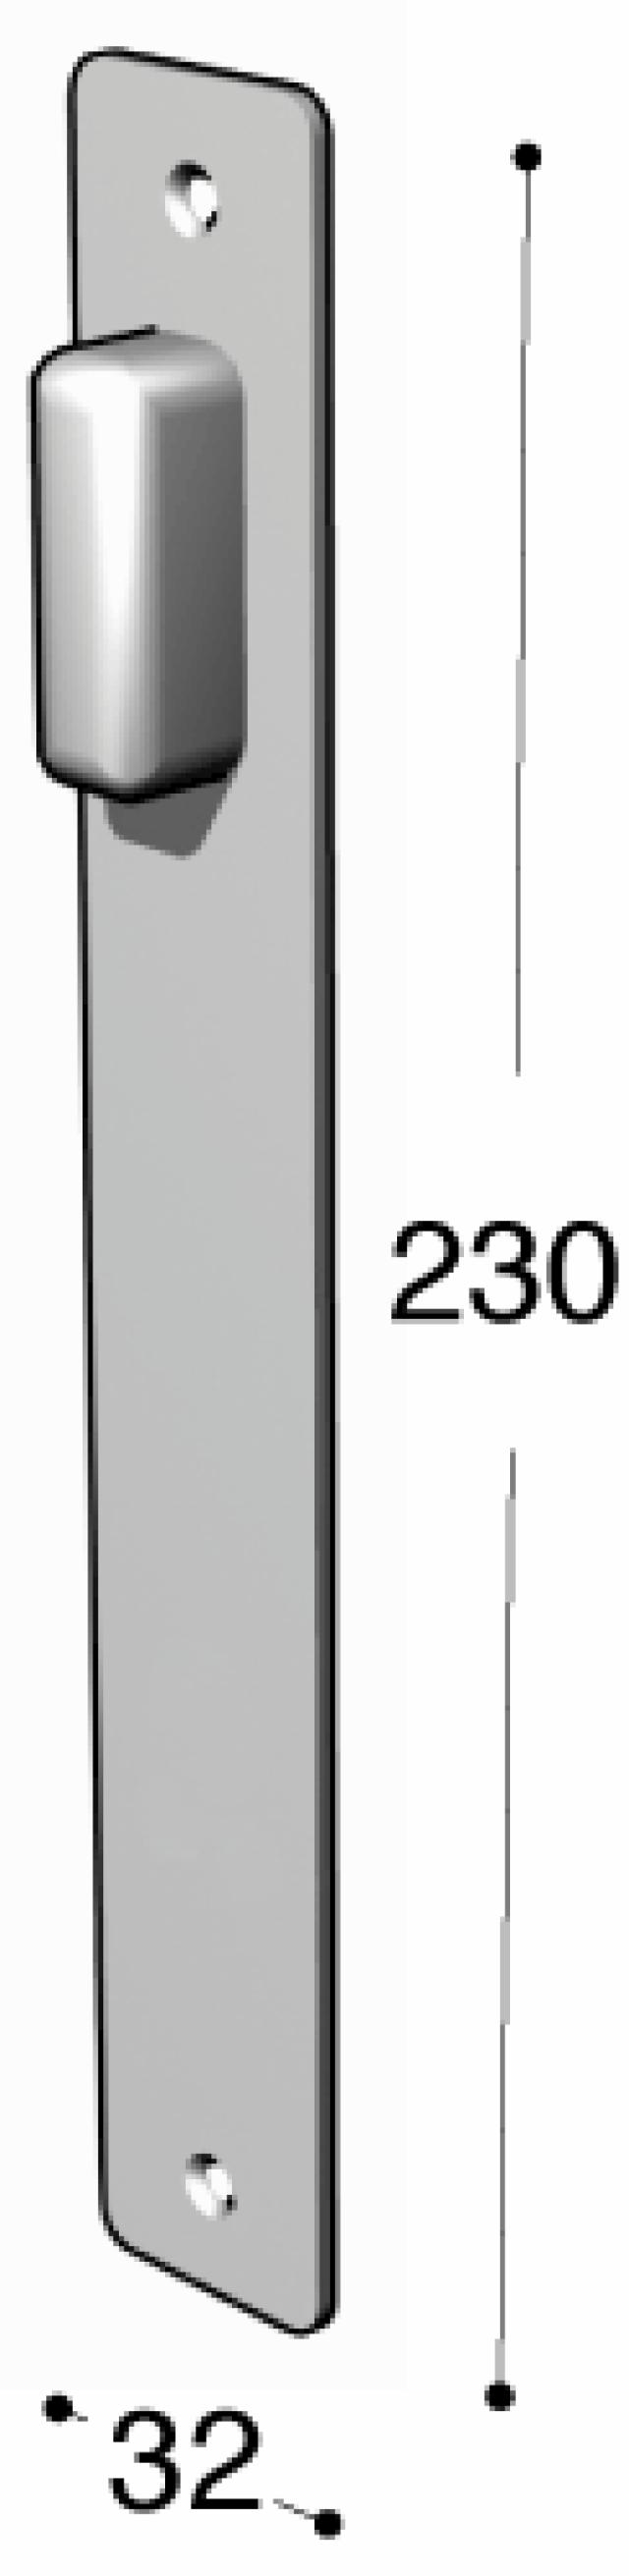 Ruko-Line smal profil lång skylt EVO, ind, twister